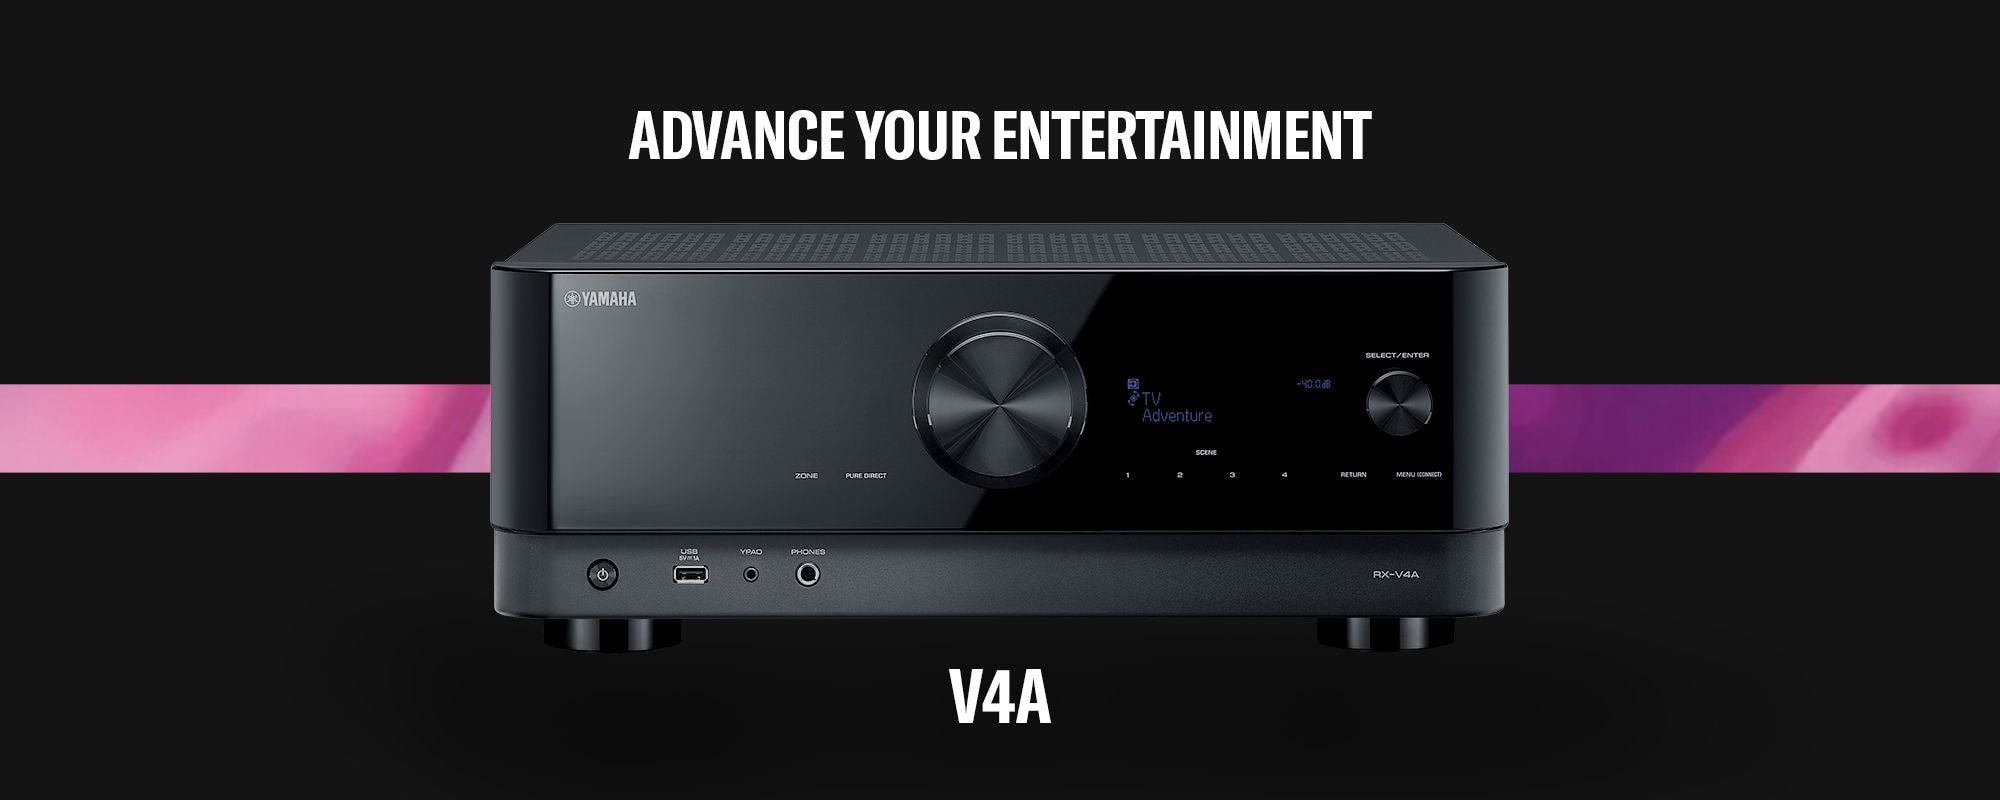 Yamaha - Advance your entertainment, V4A